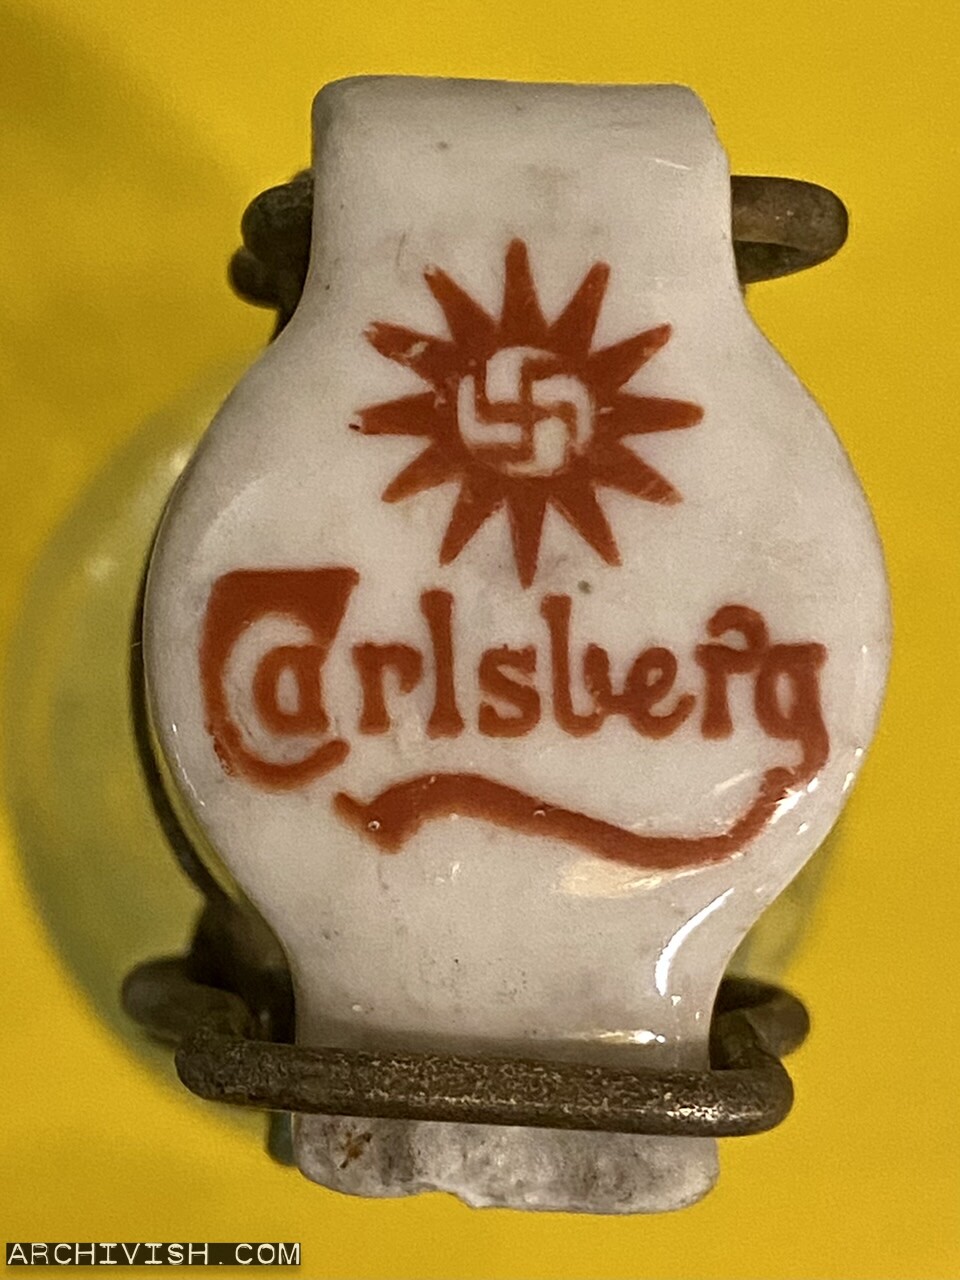 Carlsberg porcelain bottle cap with a pre-nazi swastika